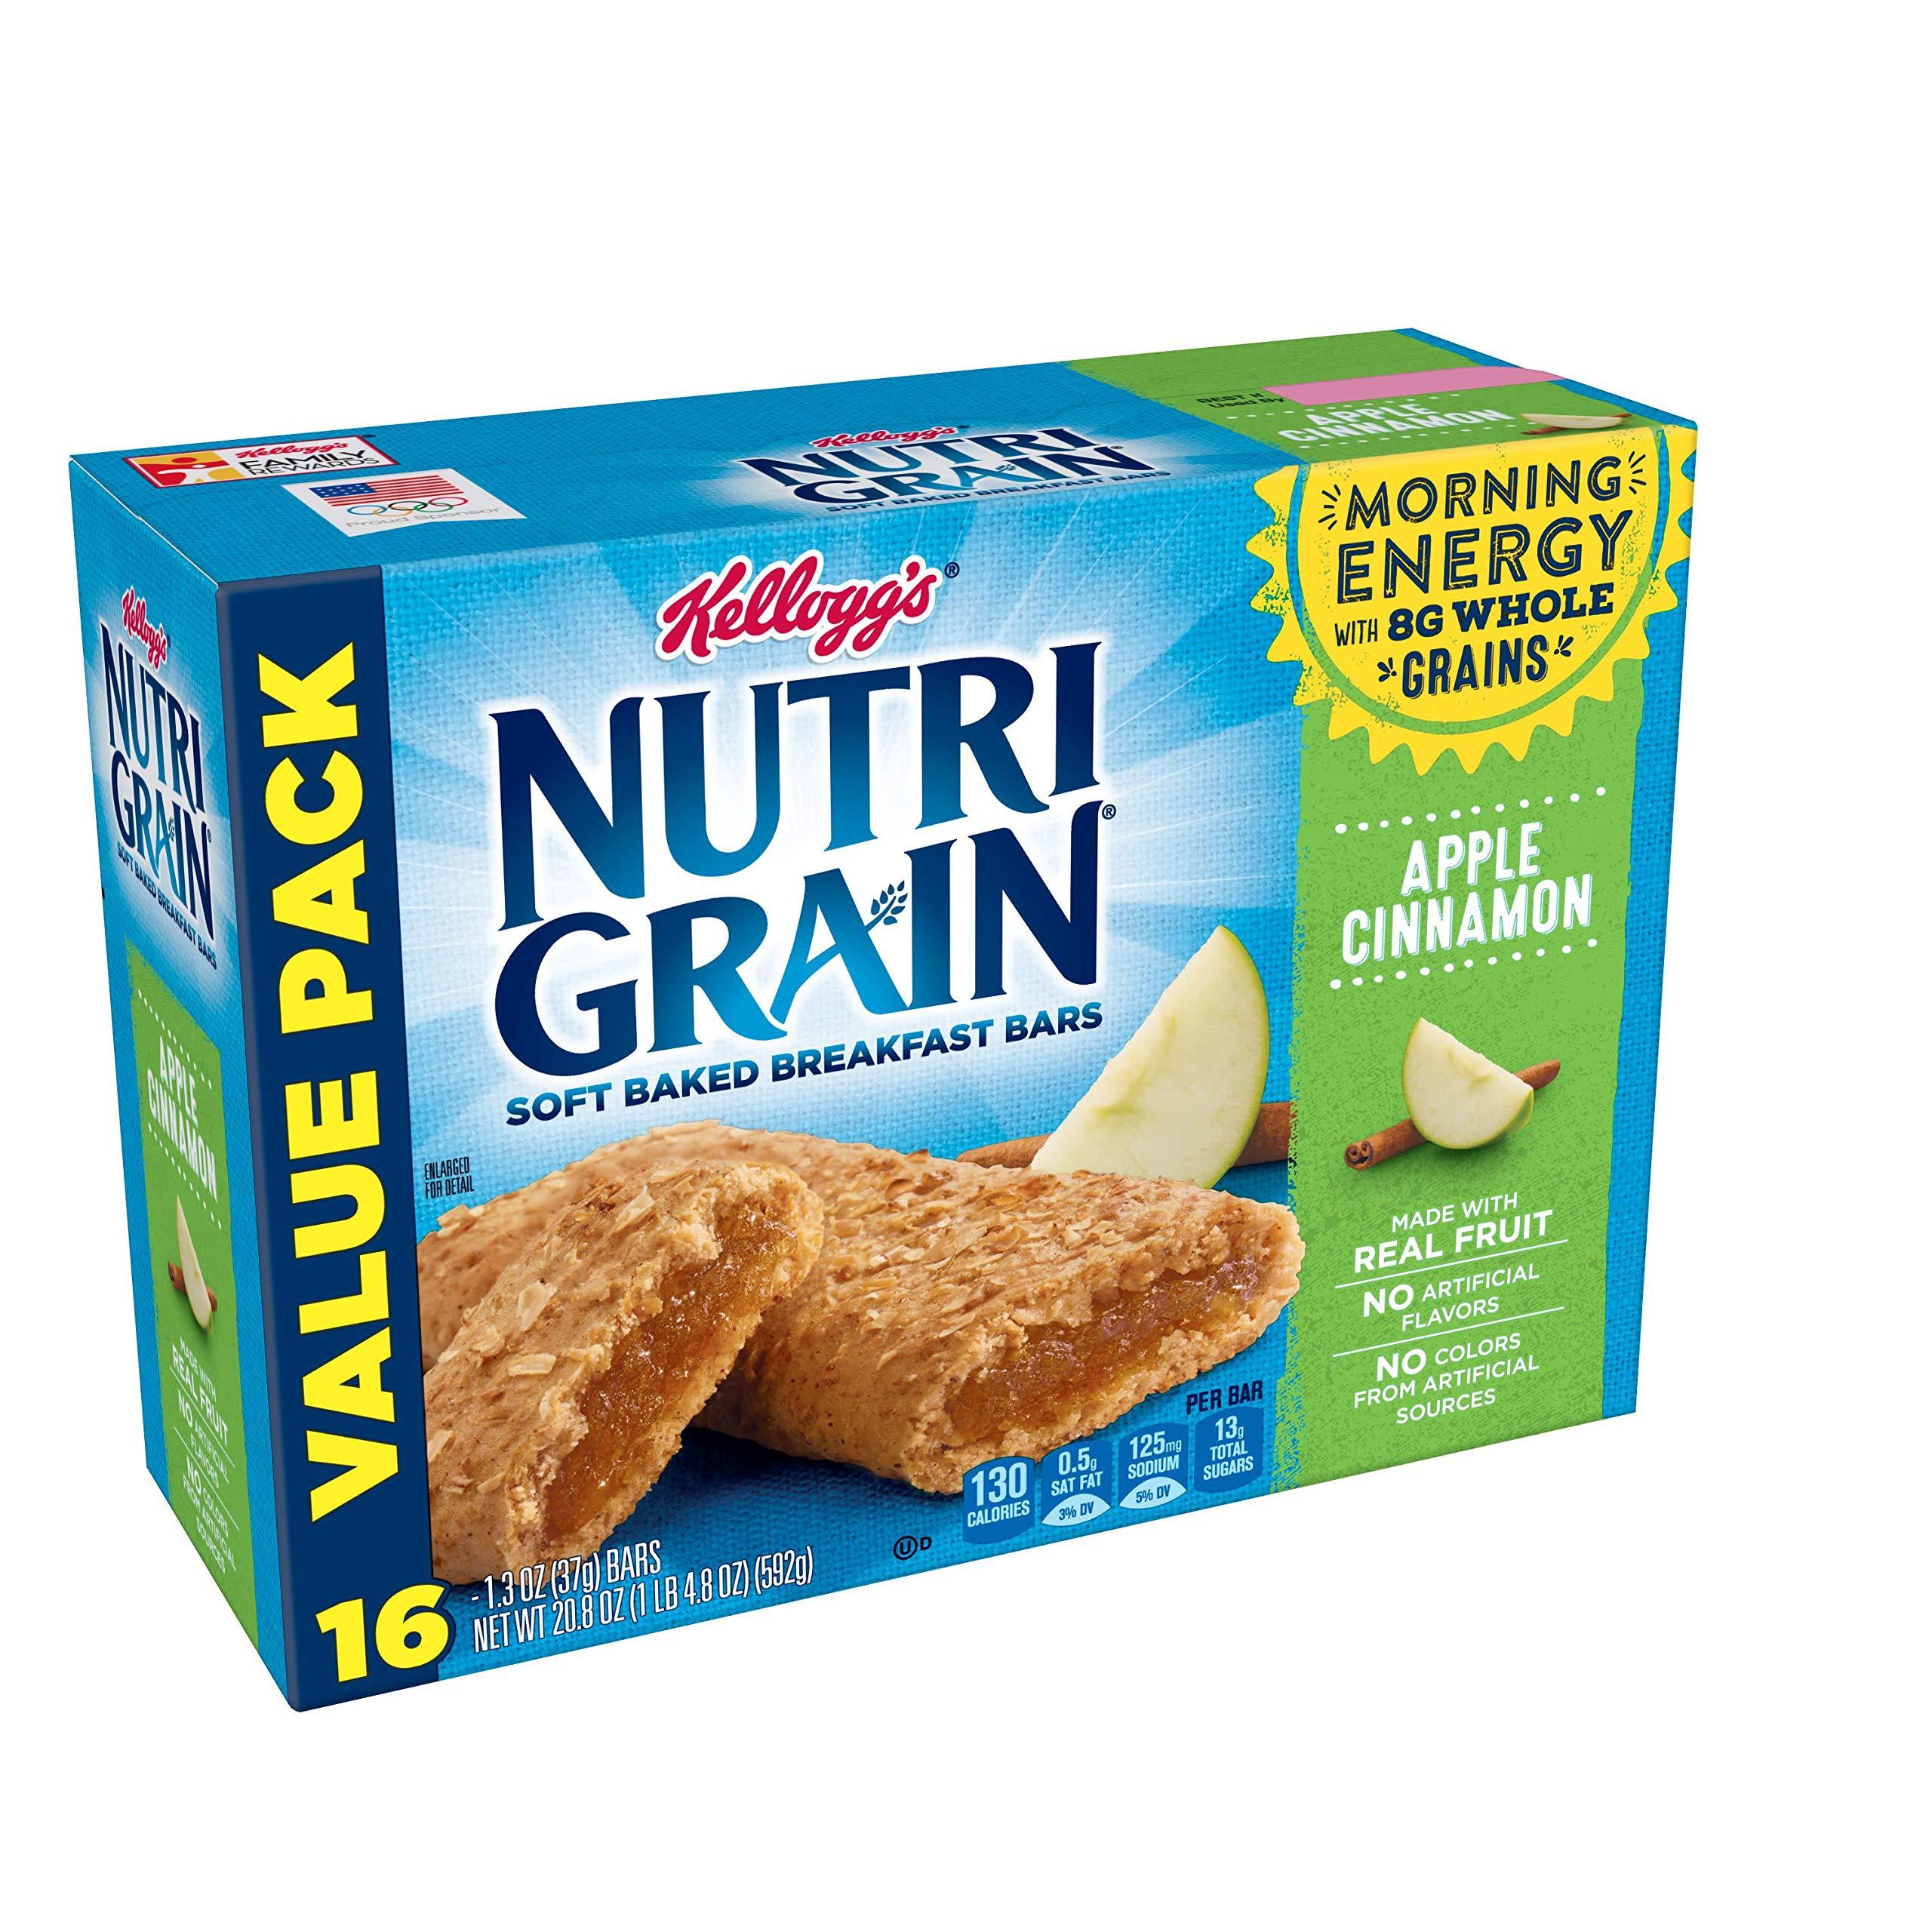 Nutri-Grain Logo - Amazon.com: Kellogg's Nutri-Grain, Soft Baked Breakfast Bars ...